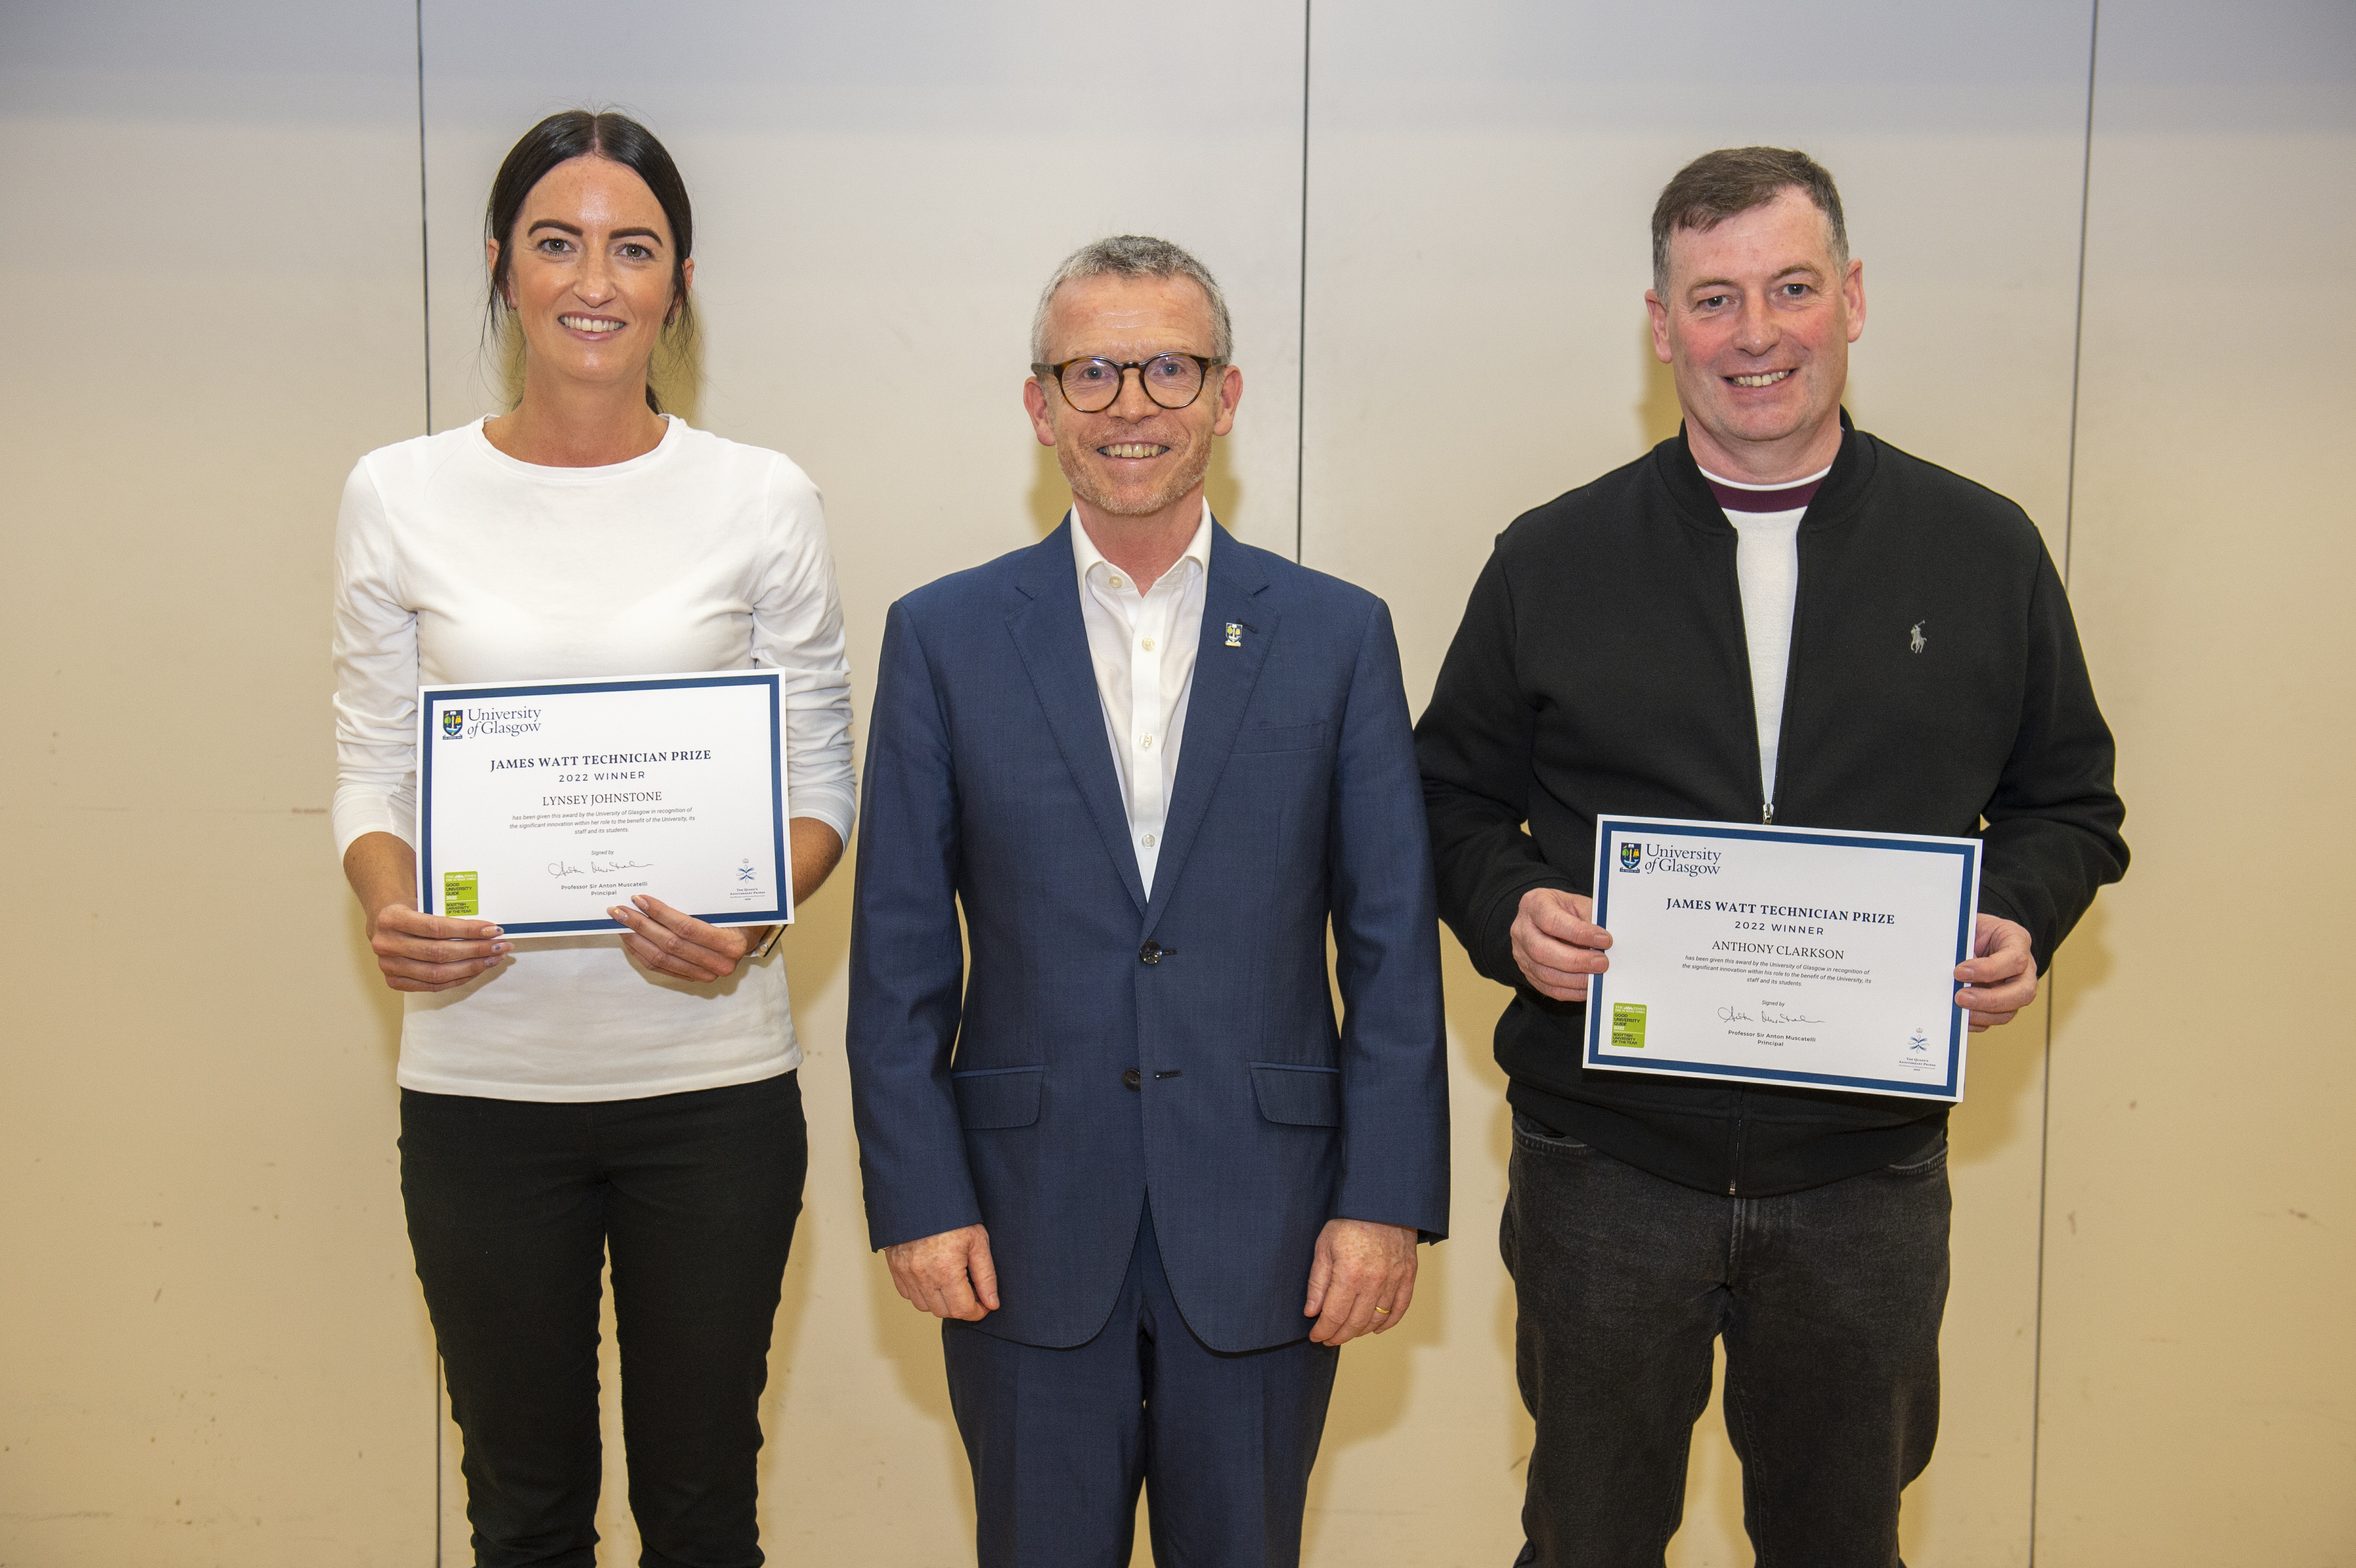 James Watt Prize winners with Senior VP